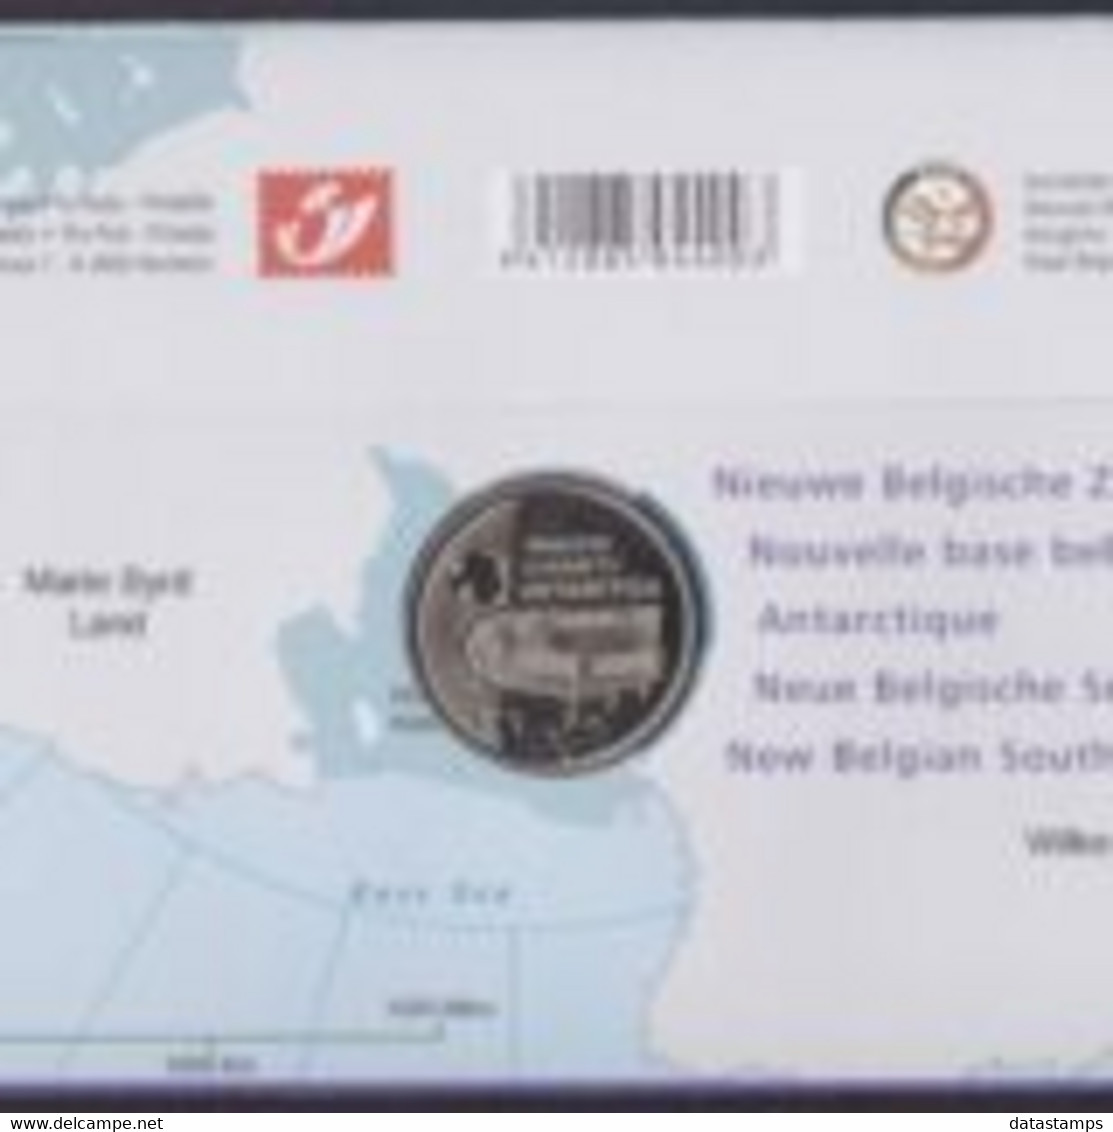 België 2007 - OBP:3661, Nummisletter - O - The South Pole - Numisletter